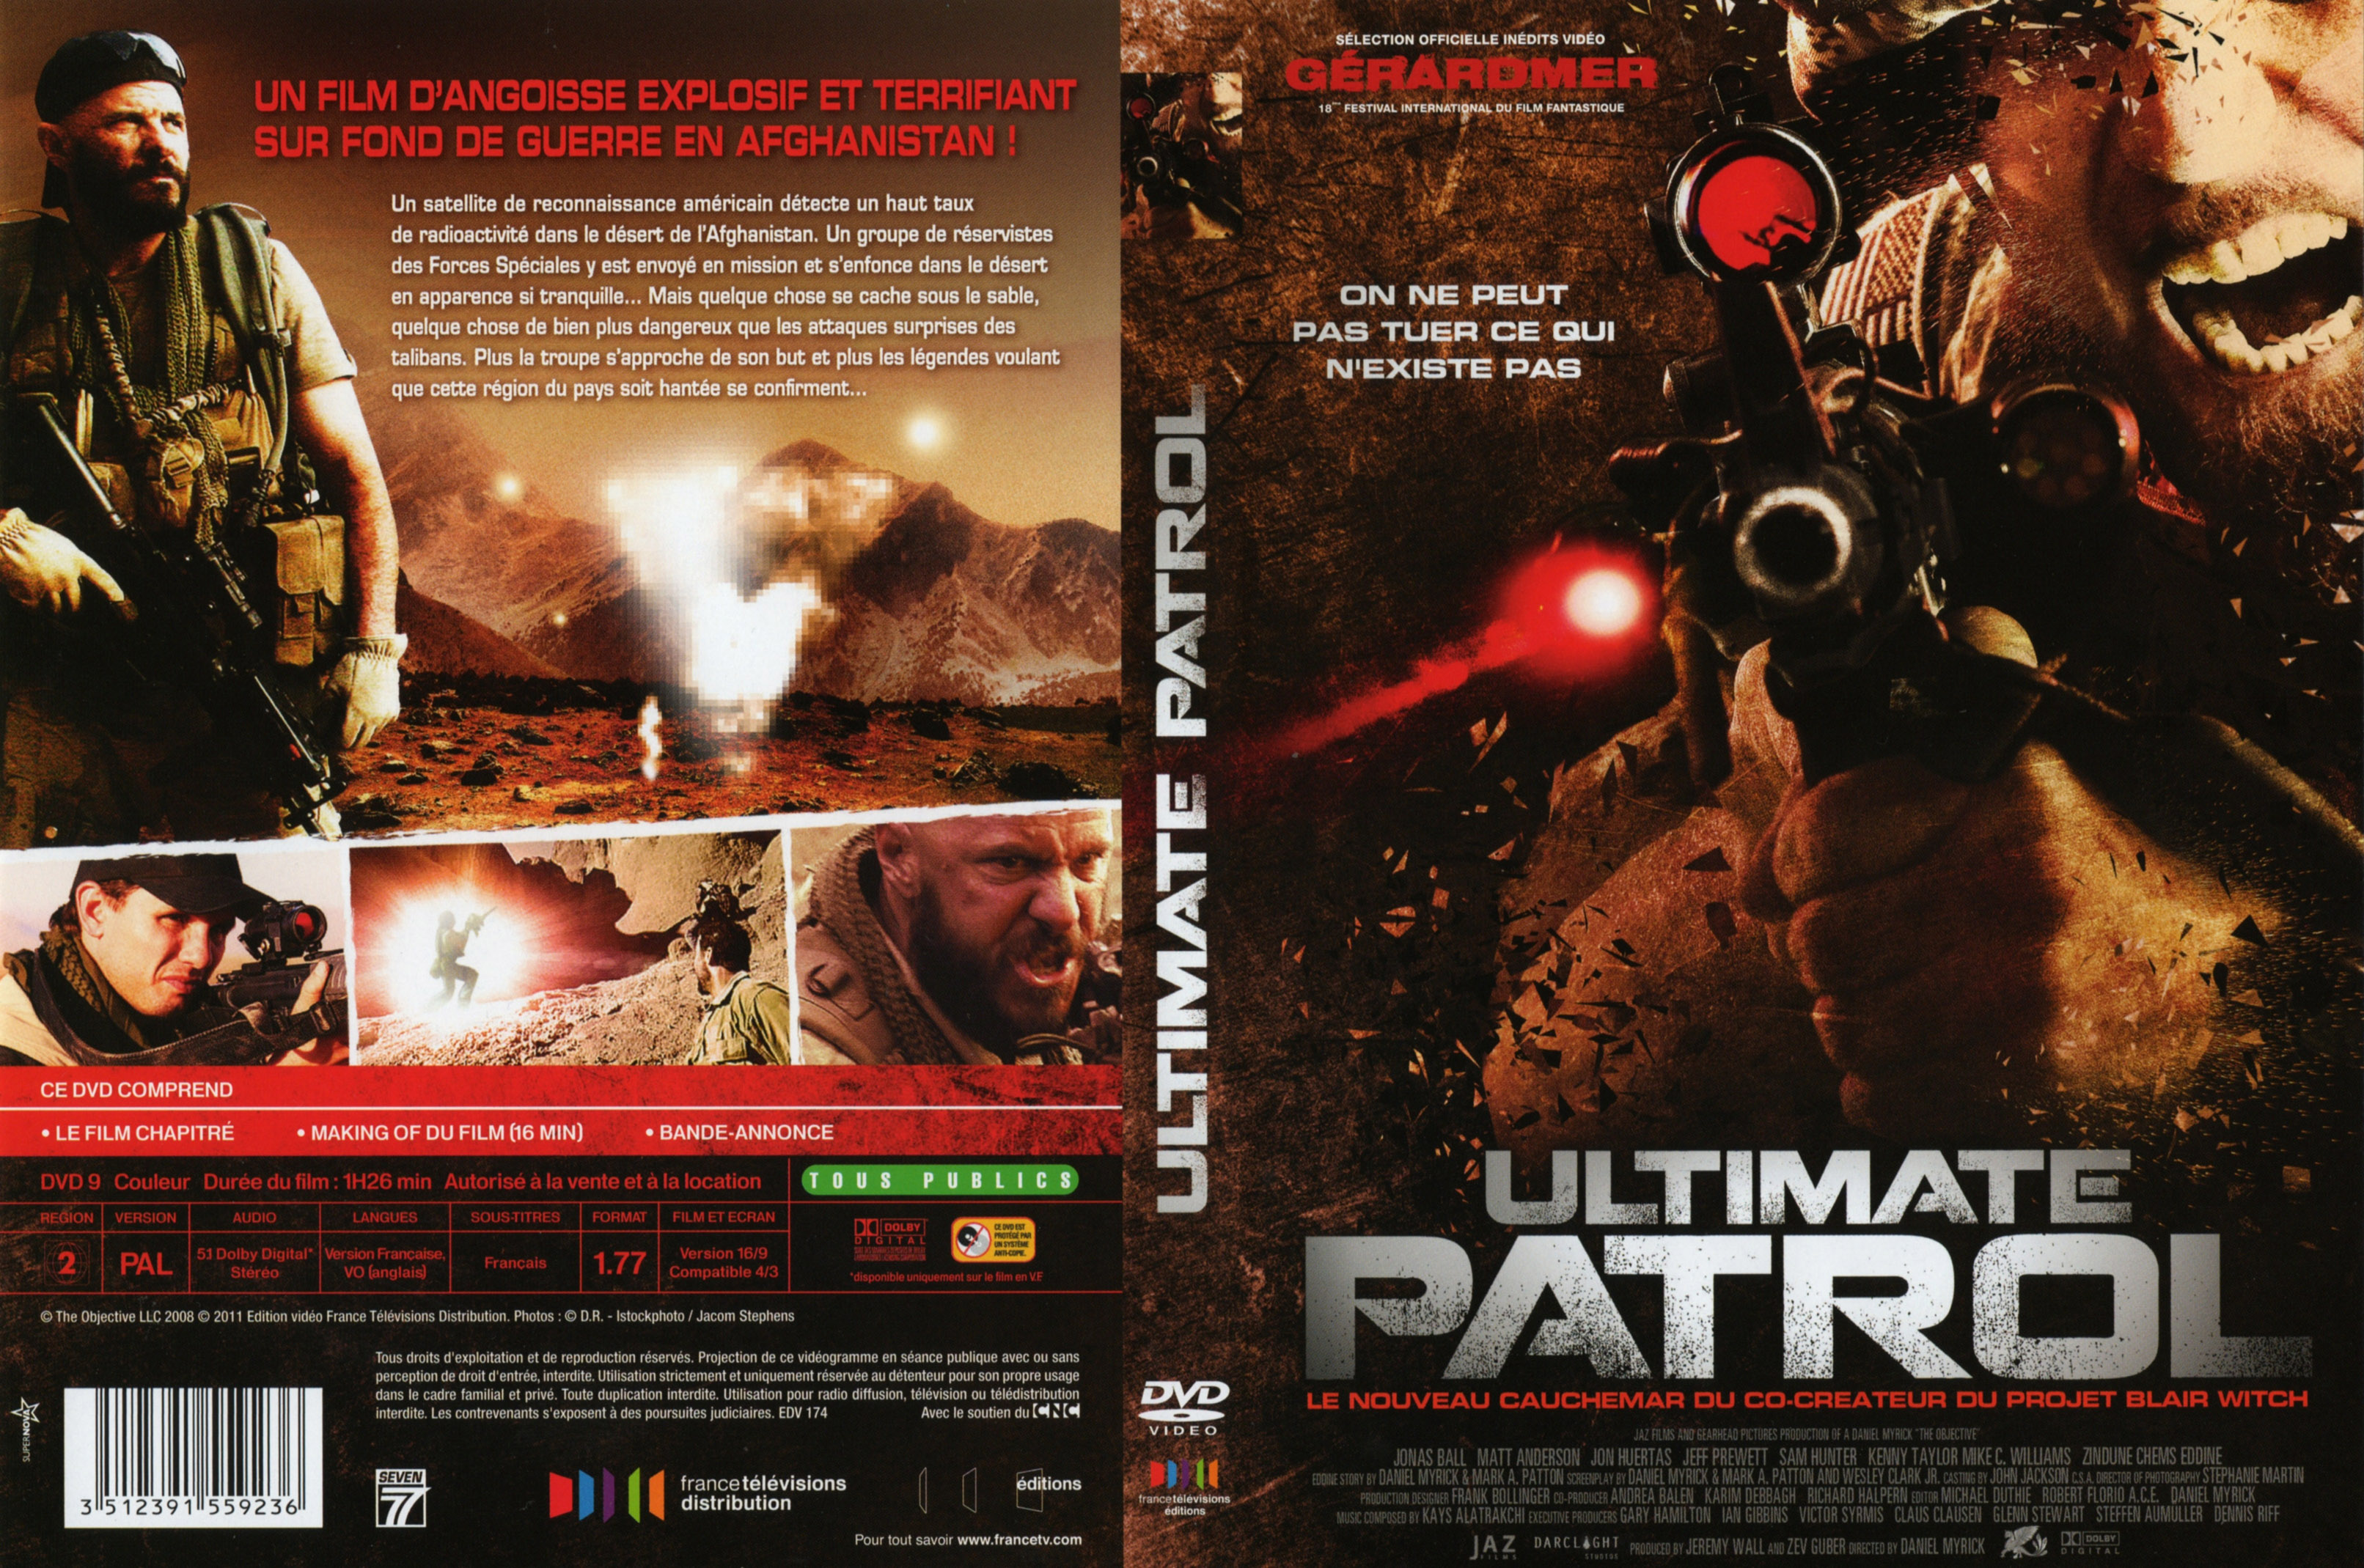 Jaquette DVD Ultimat Patrol